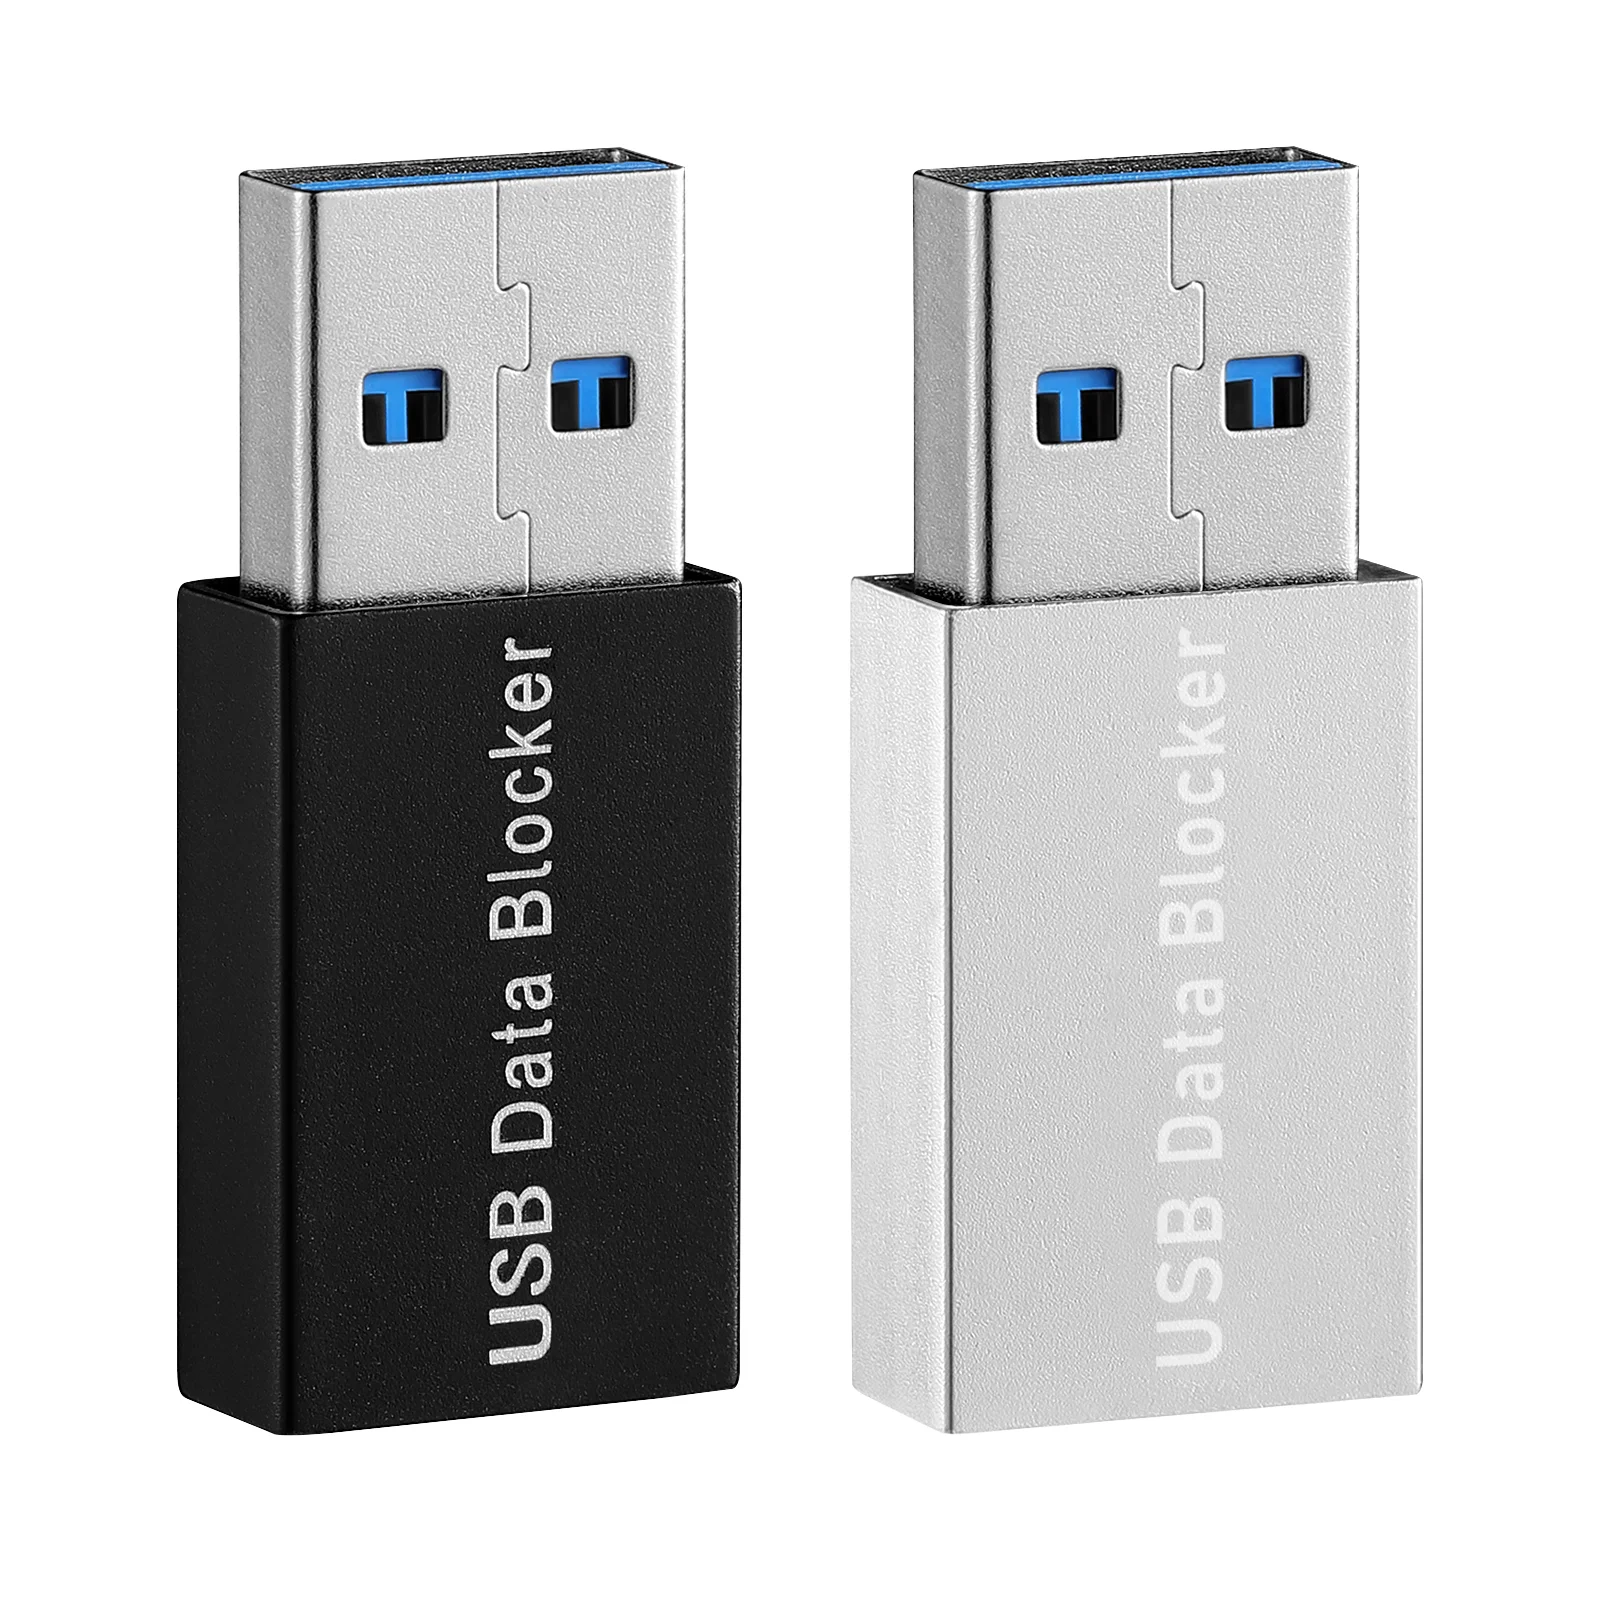 

2pcs Anti Hacking Convenient USB Defenders Data Sync Blockers USB Data Blockers for Charging Travel Trip